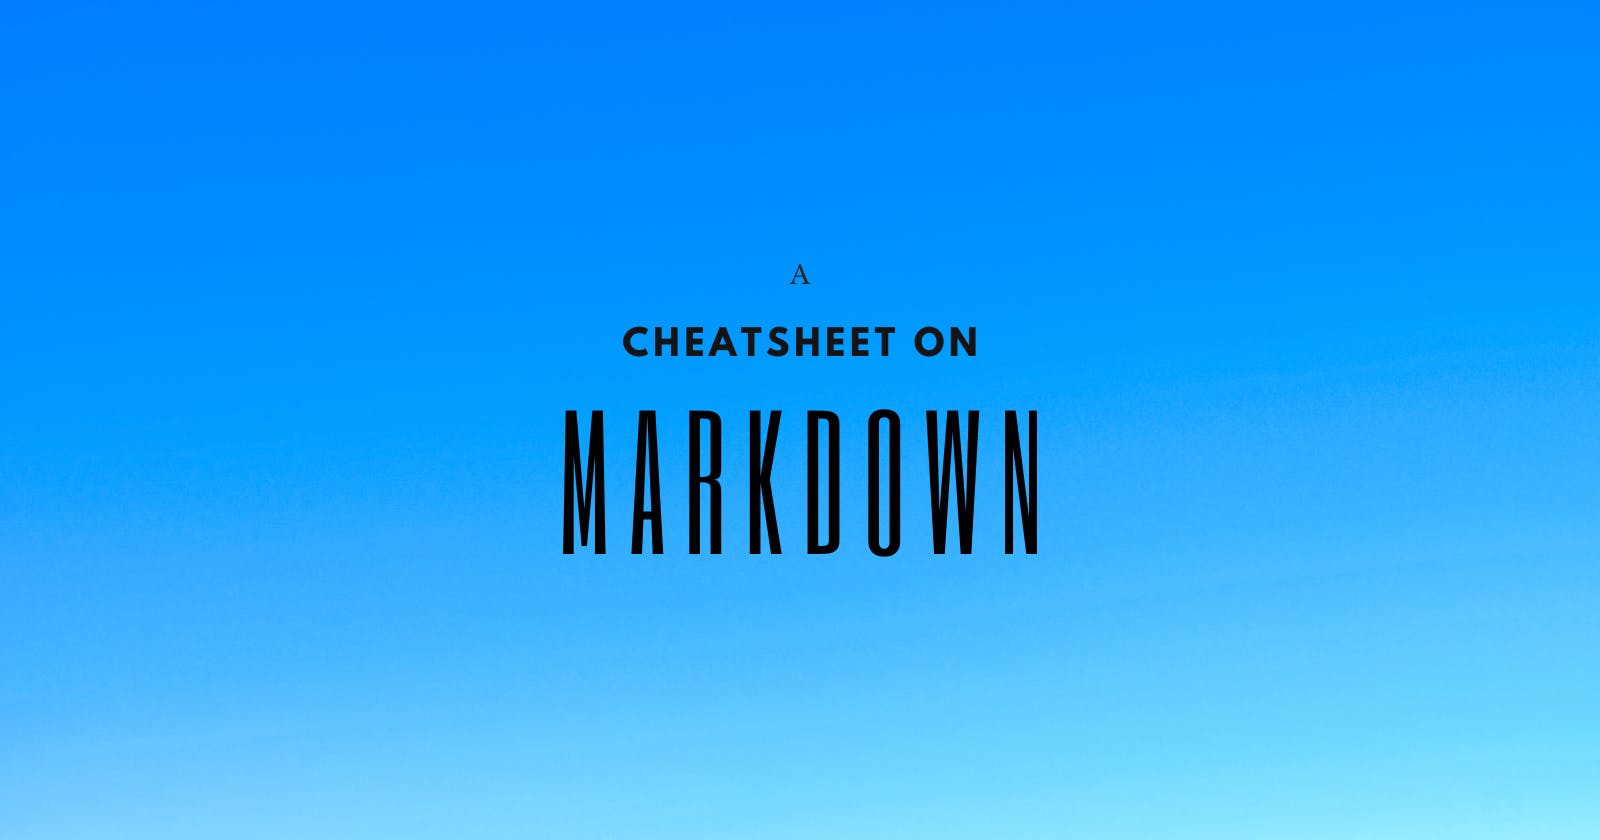 Markdown Cheatsheet